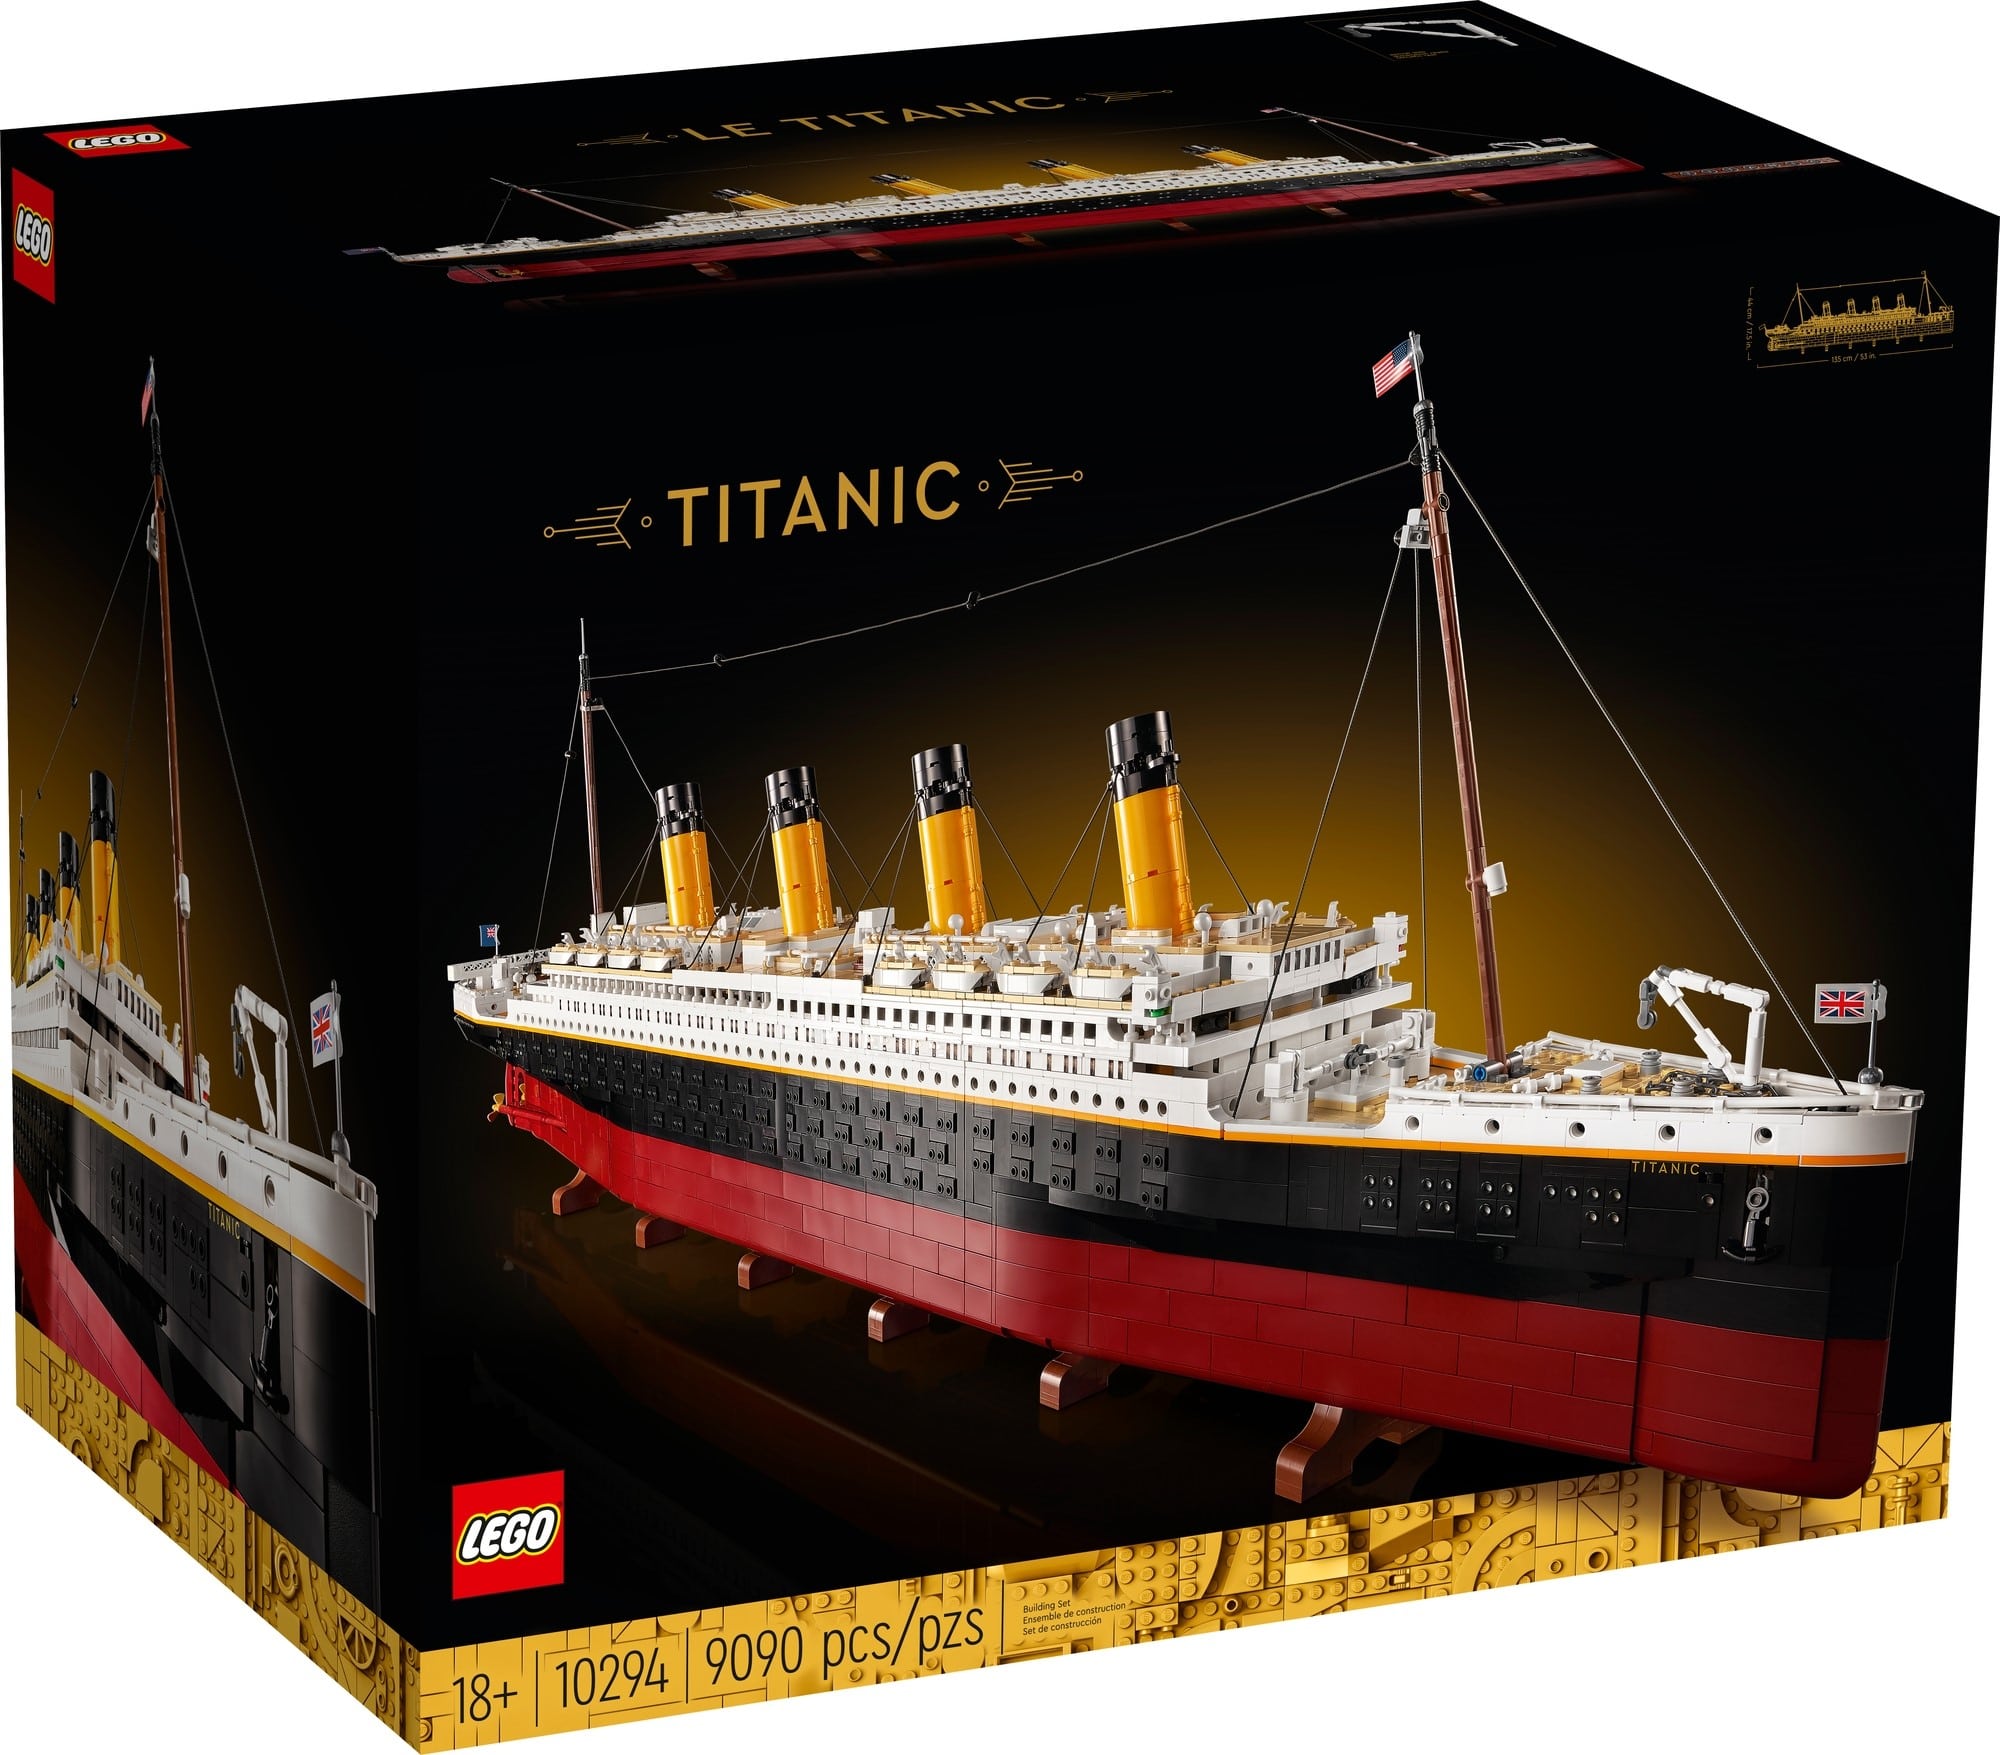 LEGO Creator Expert 10294 Titanic 2